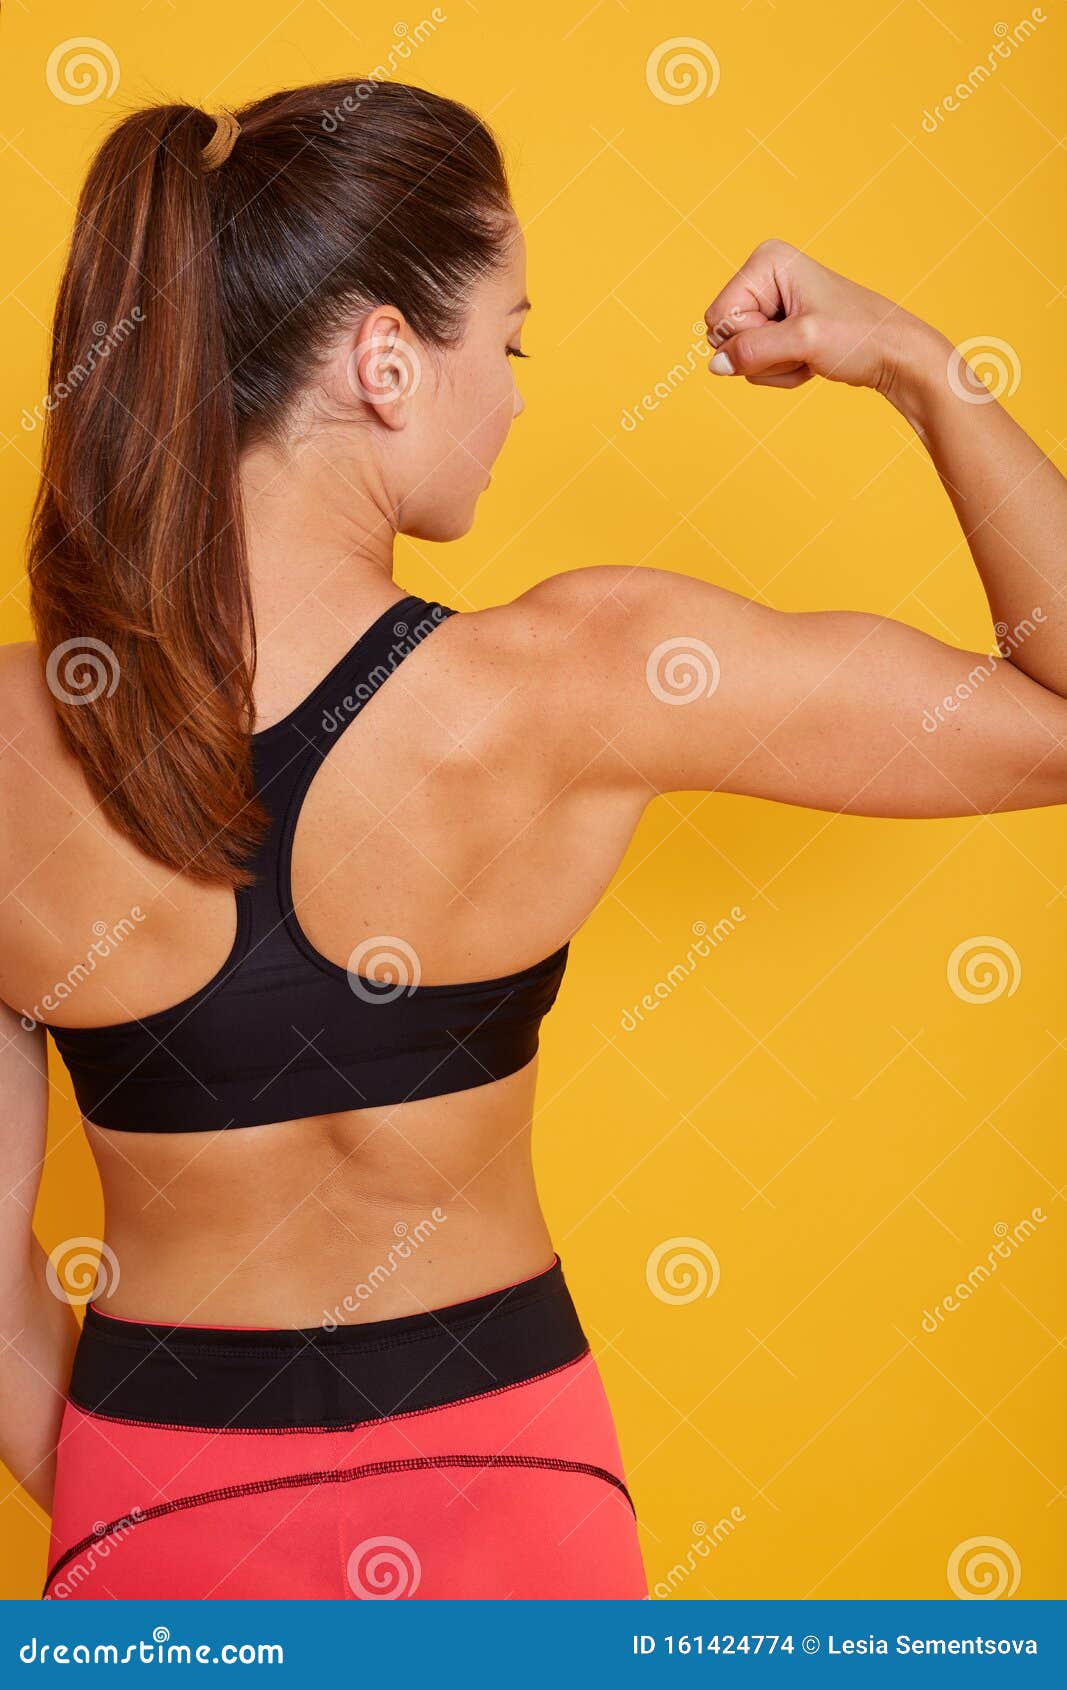 17,640 Woman Arm Muscular Stock Photos - Free & Royalty-Free Stock